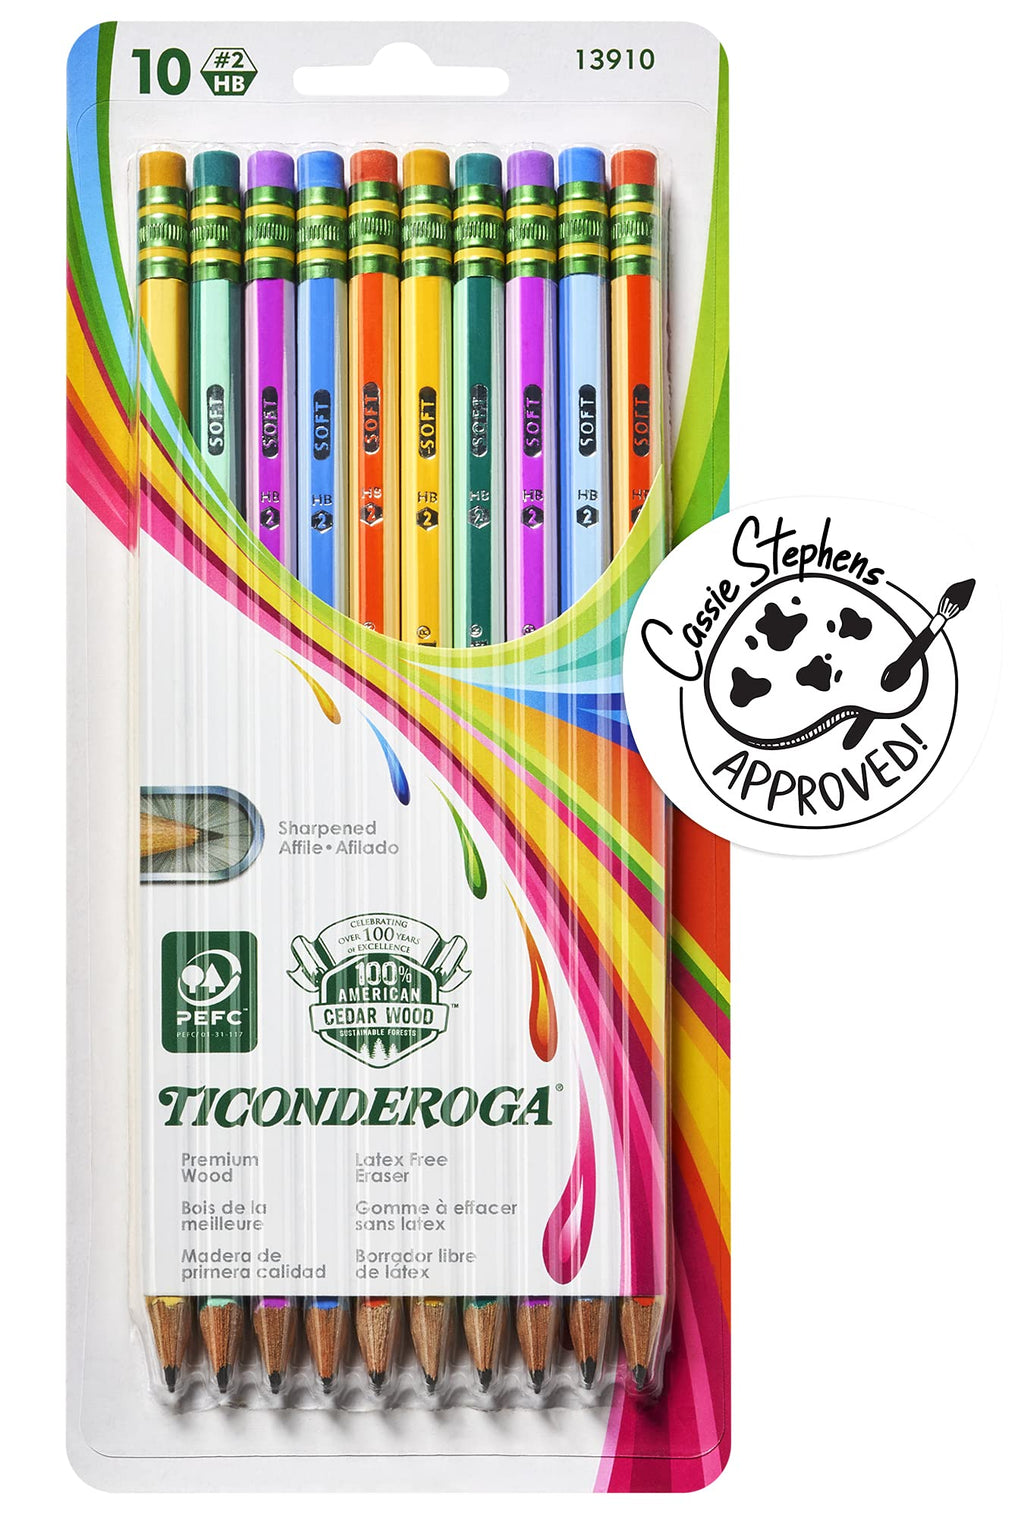  [AUSTRALIA] - Ticonderoga X13910 Striped Wood-Cased Pencils, 2 HB Soft, Pre-Sharpened, 10 Count, Assorted Colors